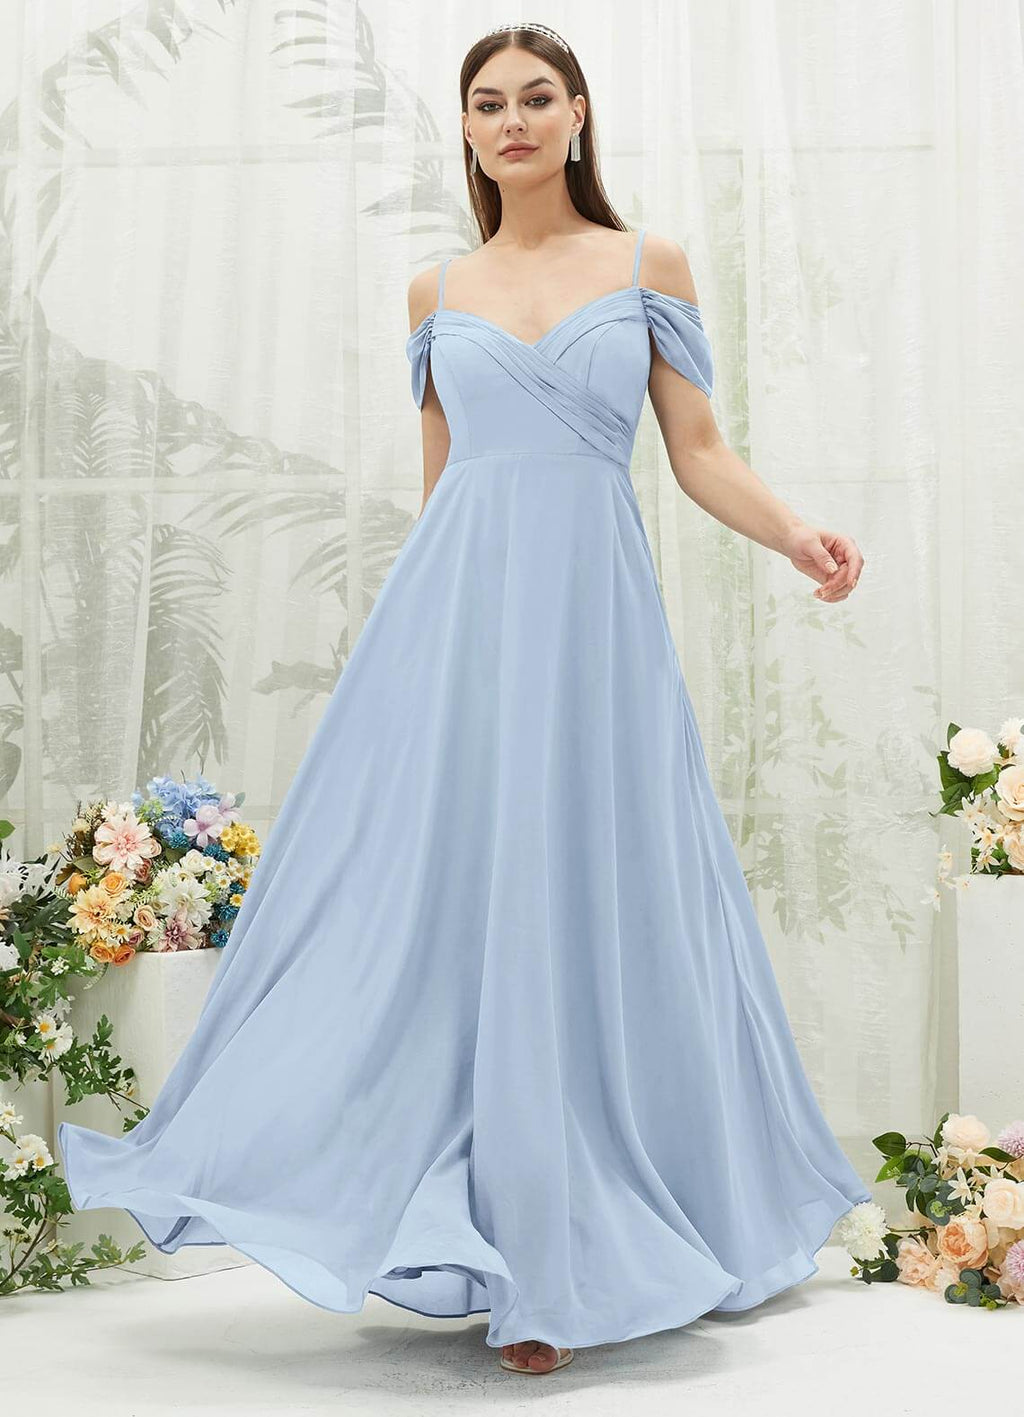 NZ Bridal Cornflower Blue Convetible Chiffon Bridesmaid Dress BG30217 Spence a